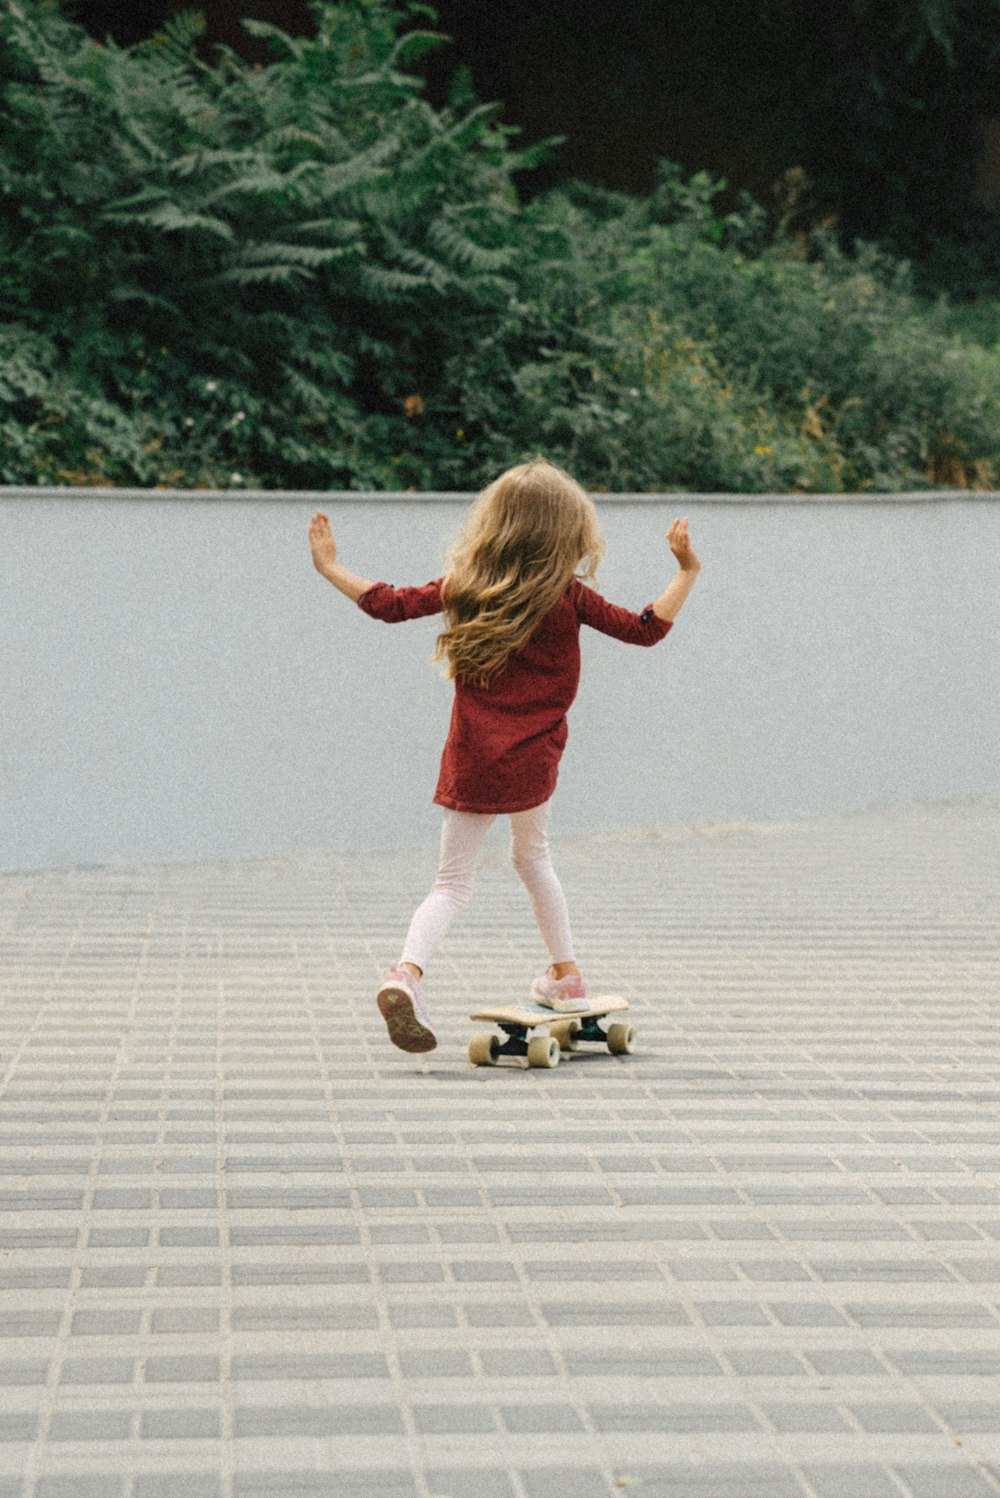 a little girl riding a skateboard down a sidewalk